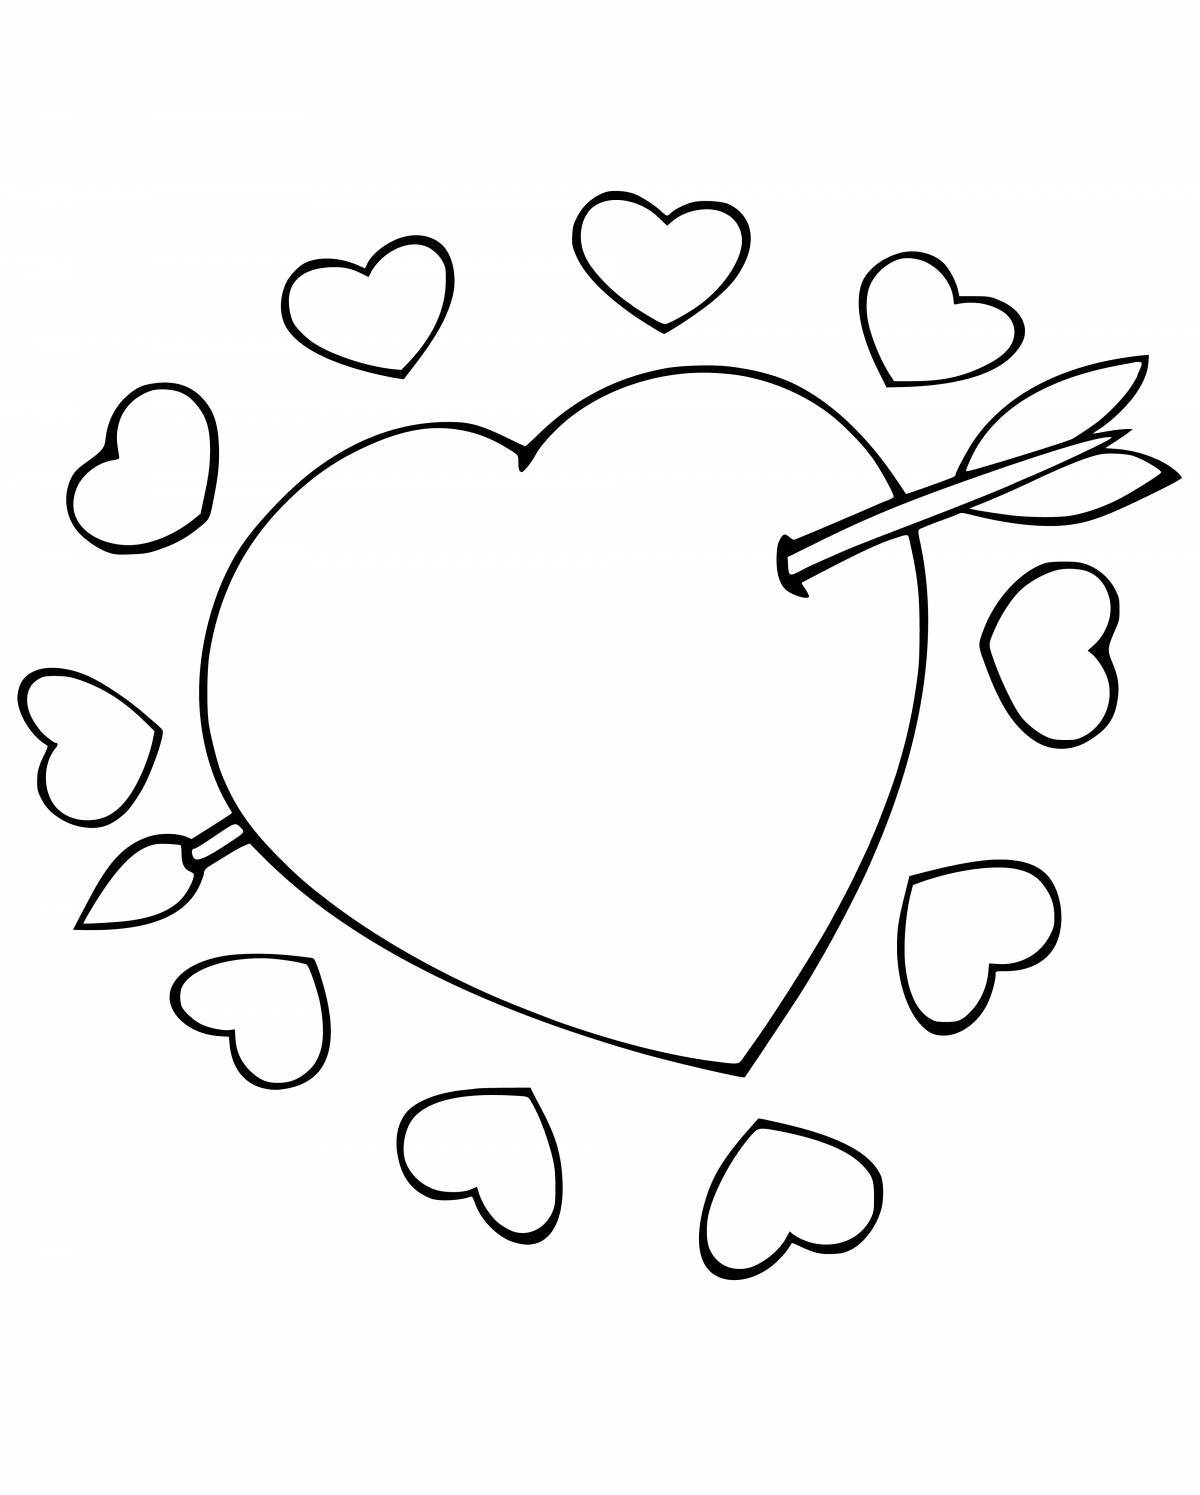 Color-crazy heart coloring page для детей